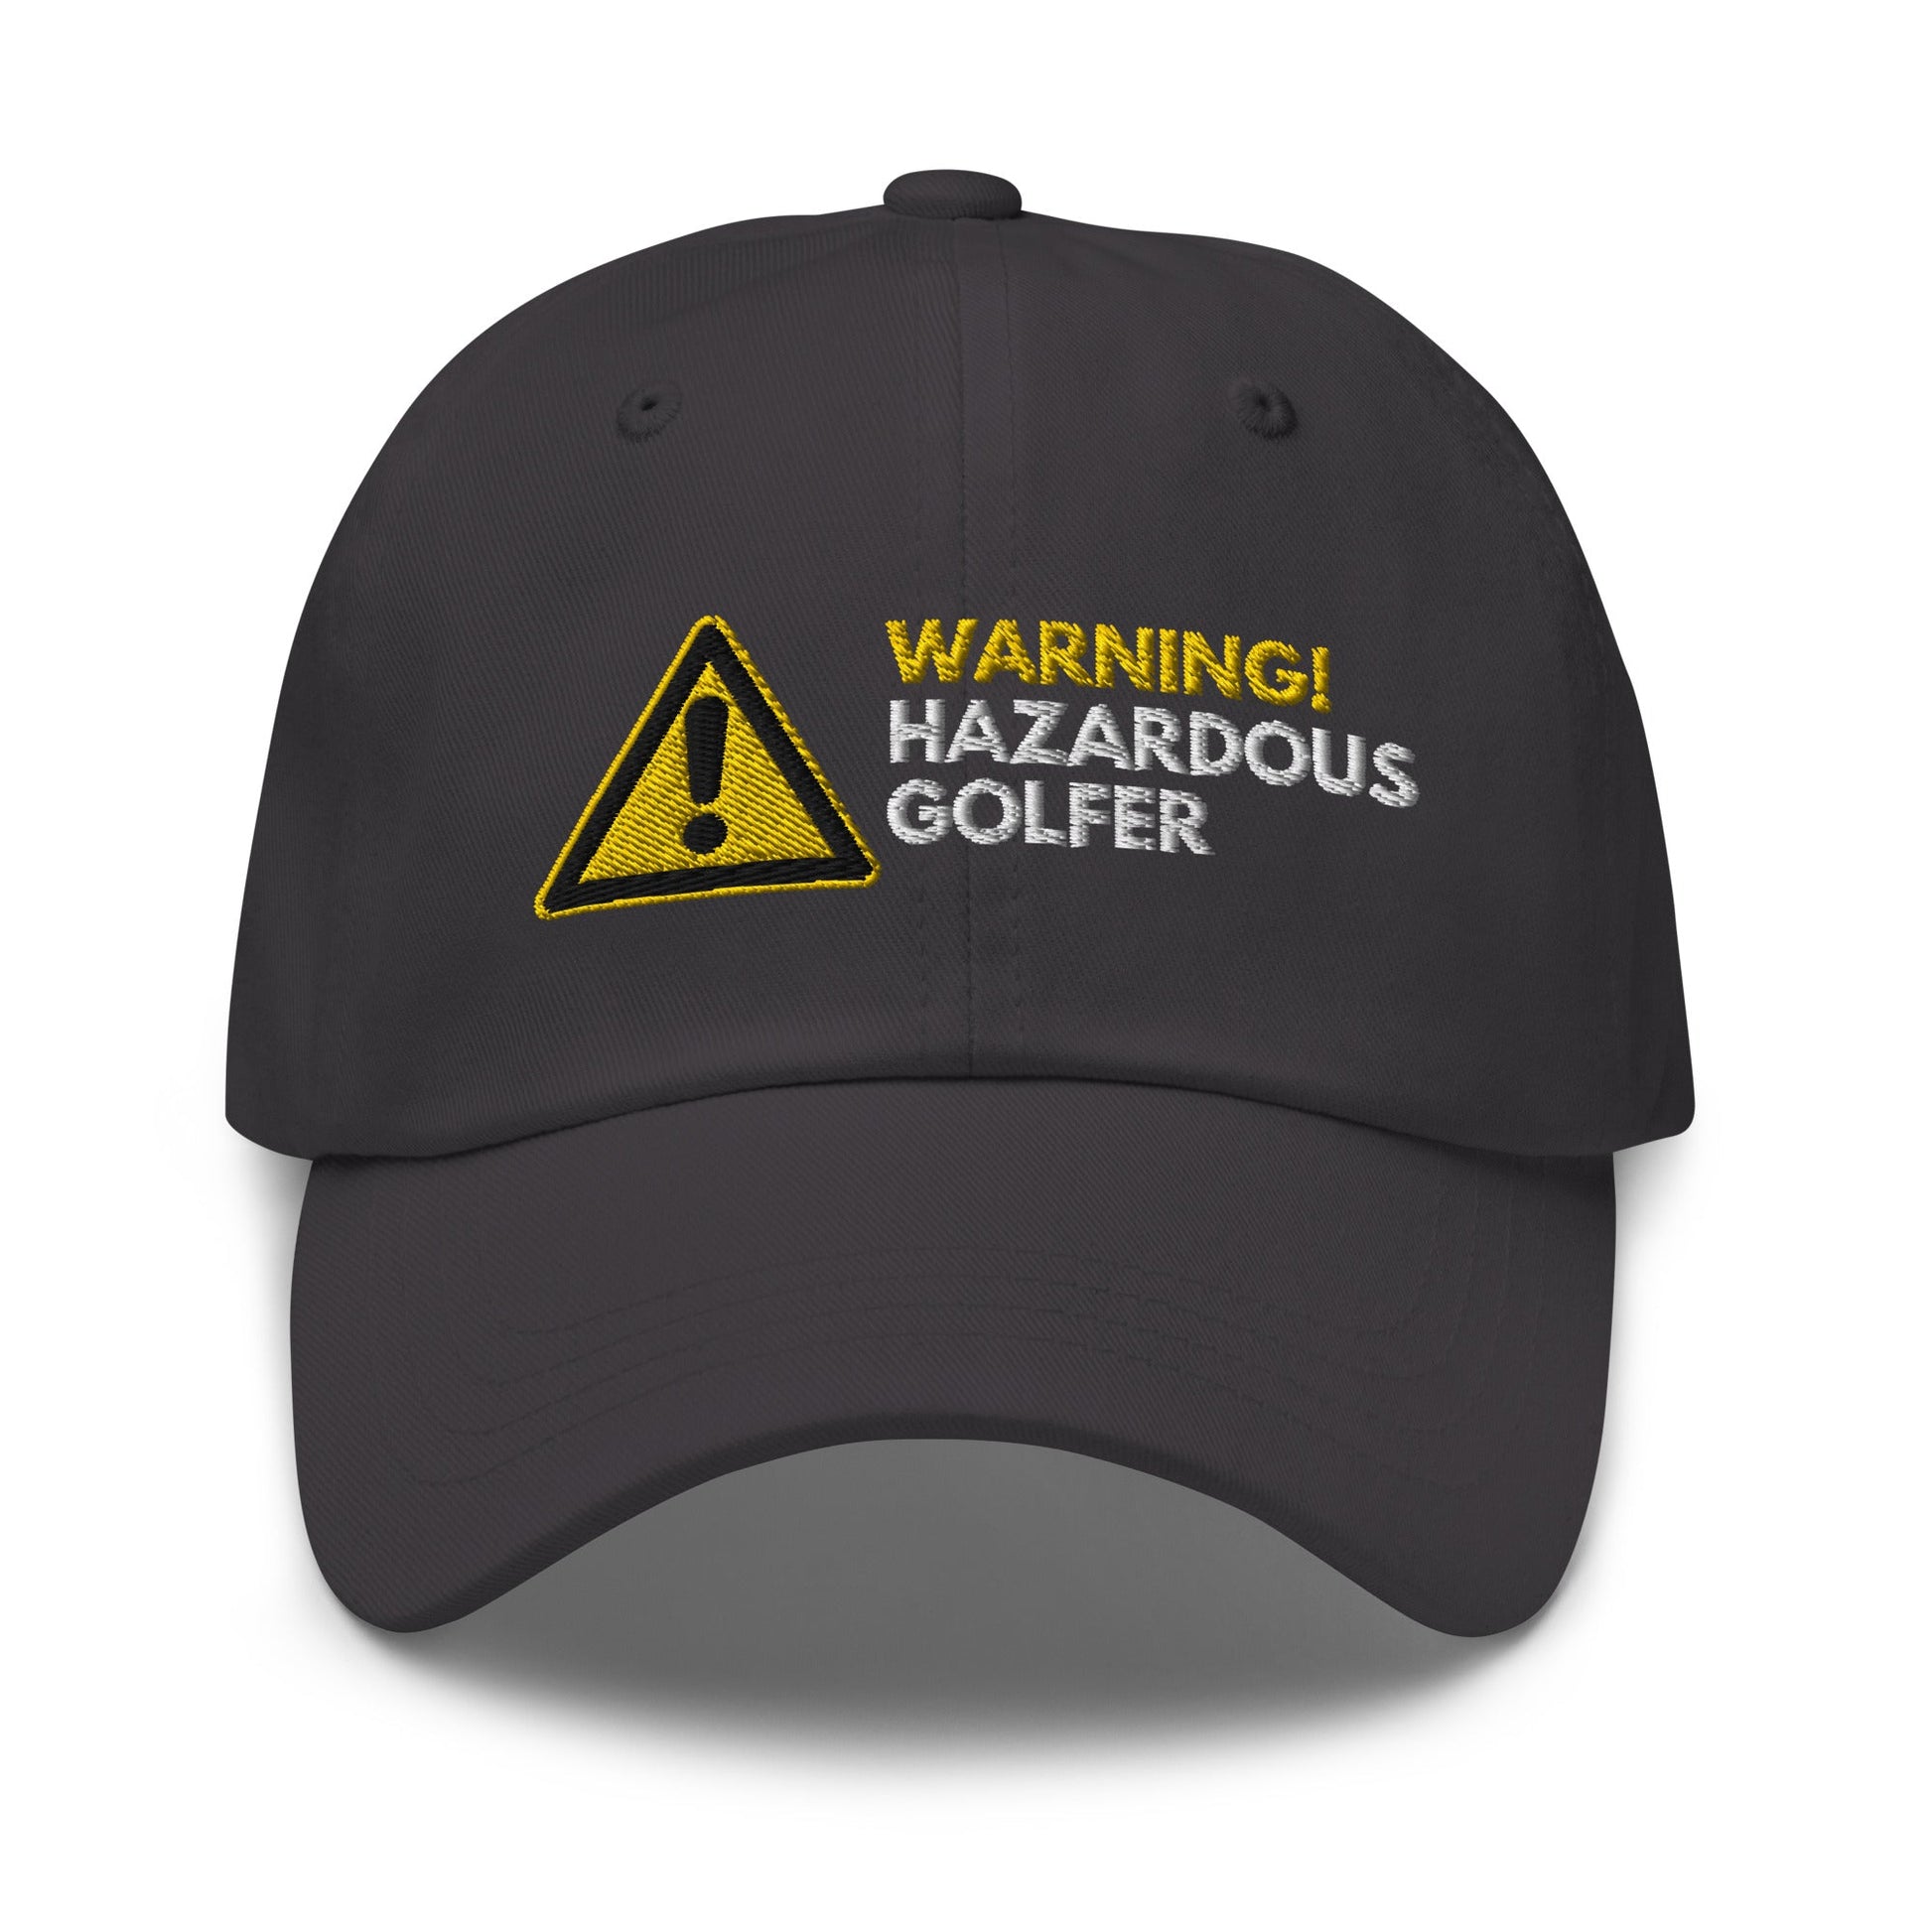 Funny Golfer Gifts  Dad Cap Warning Hazardous Golfer Cap